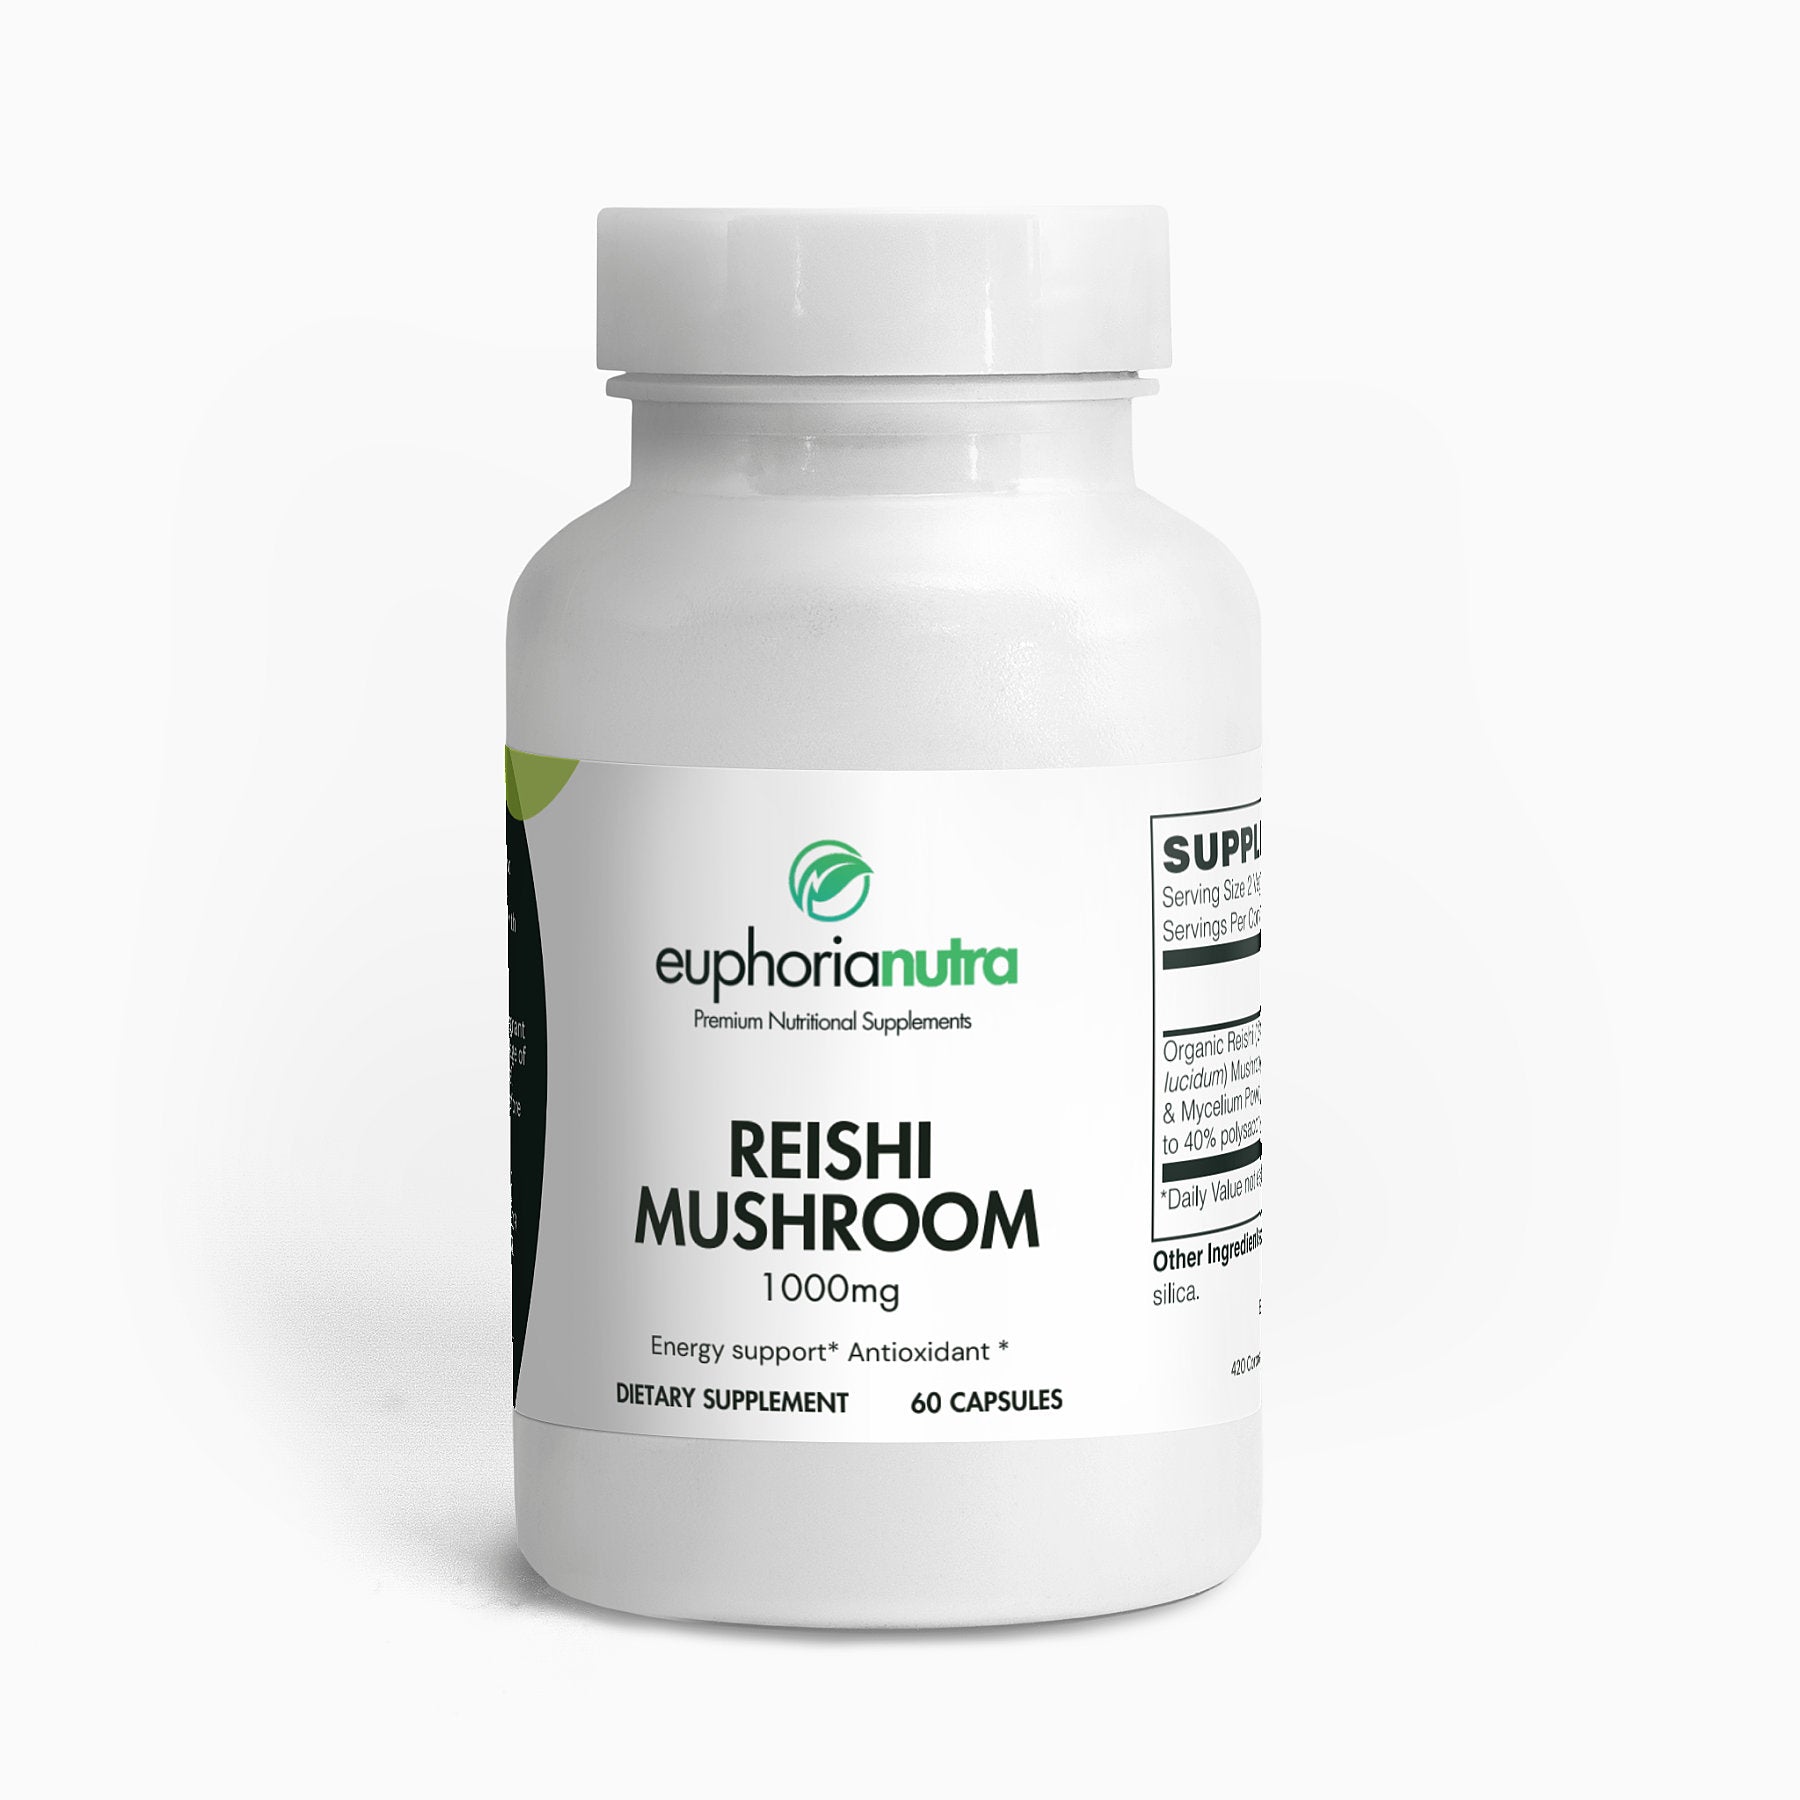 Reishi-Mushroom-euphorianutra-bottle